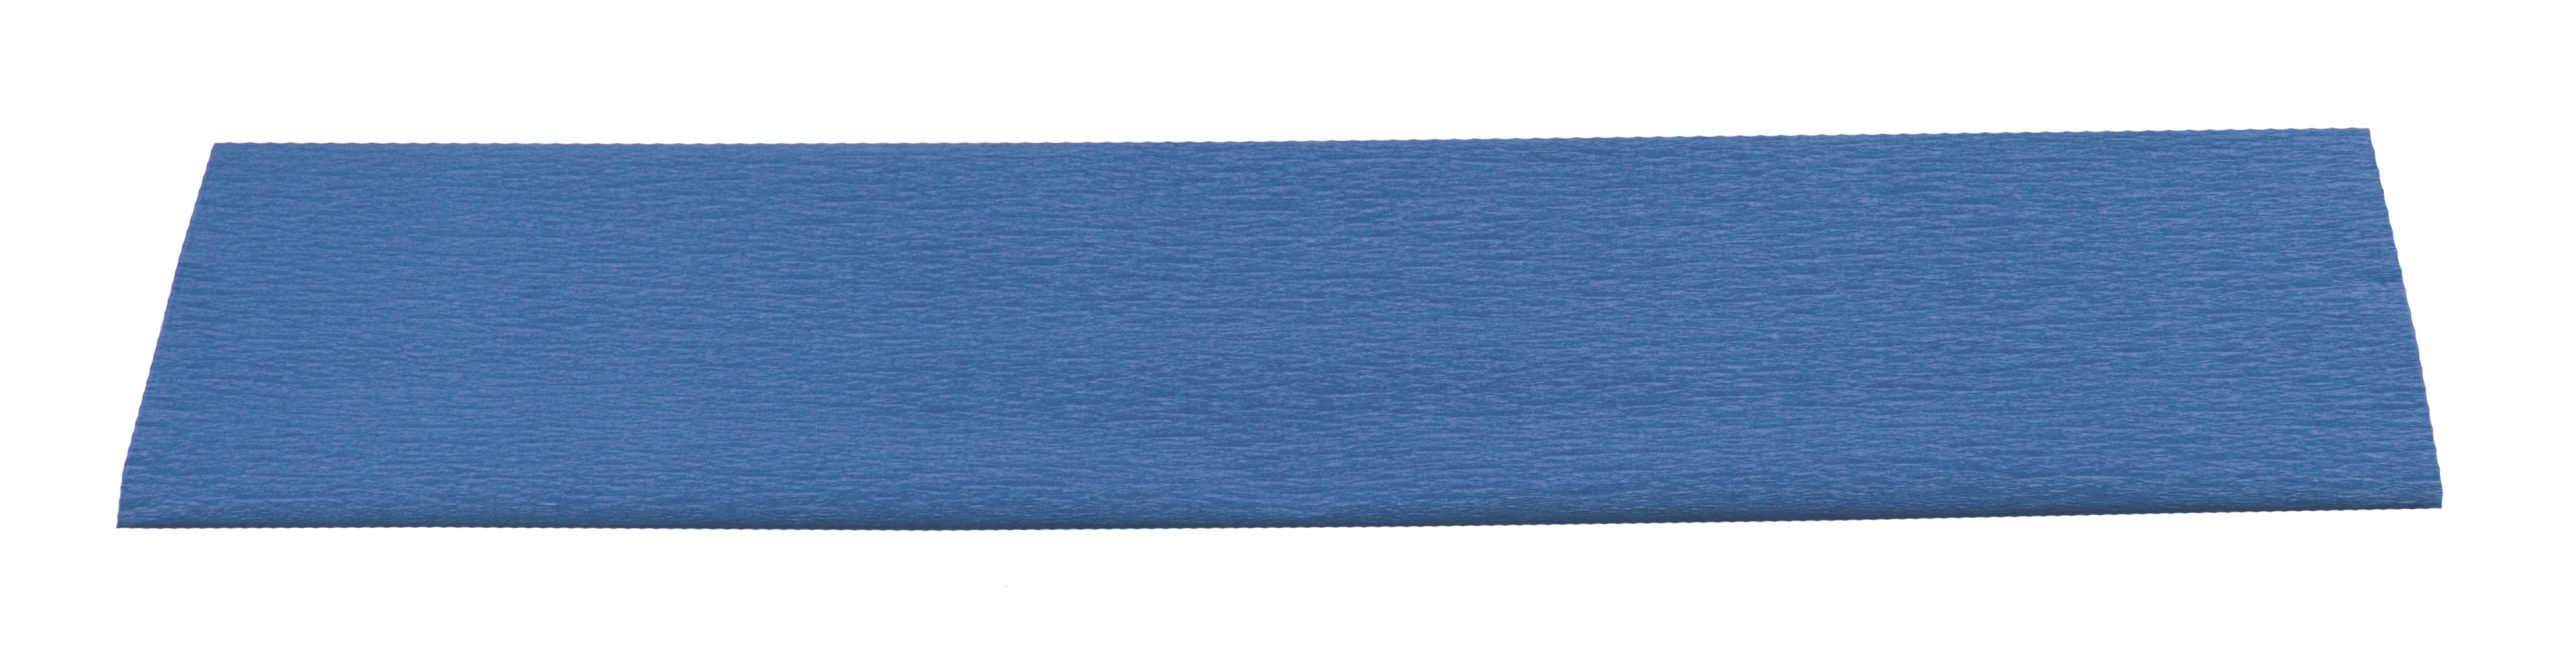 Hârtie creponată Hobby 50 x 200 cm albastru, Herlitz